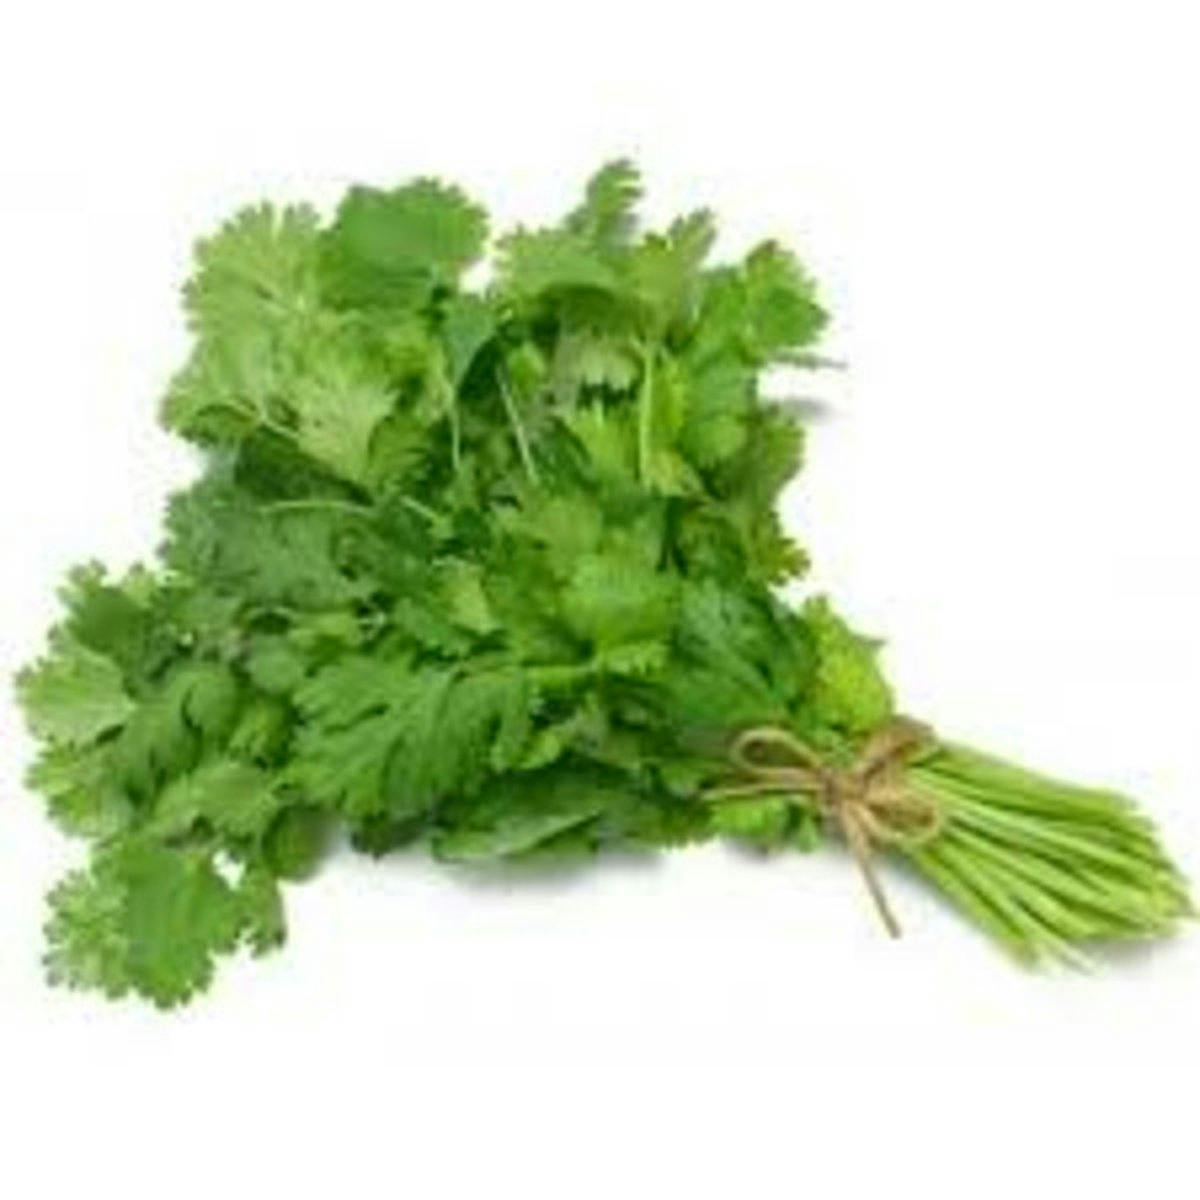 of cilantro, whole leaves